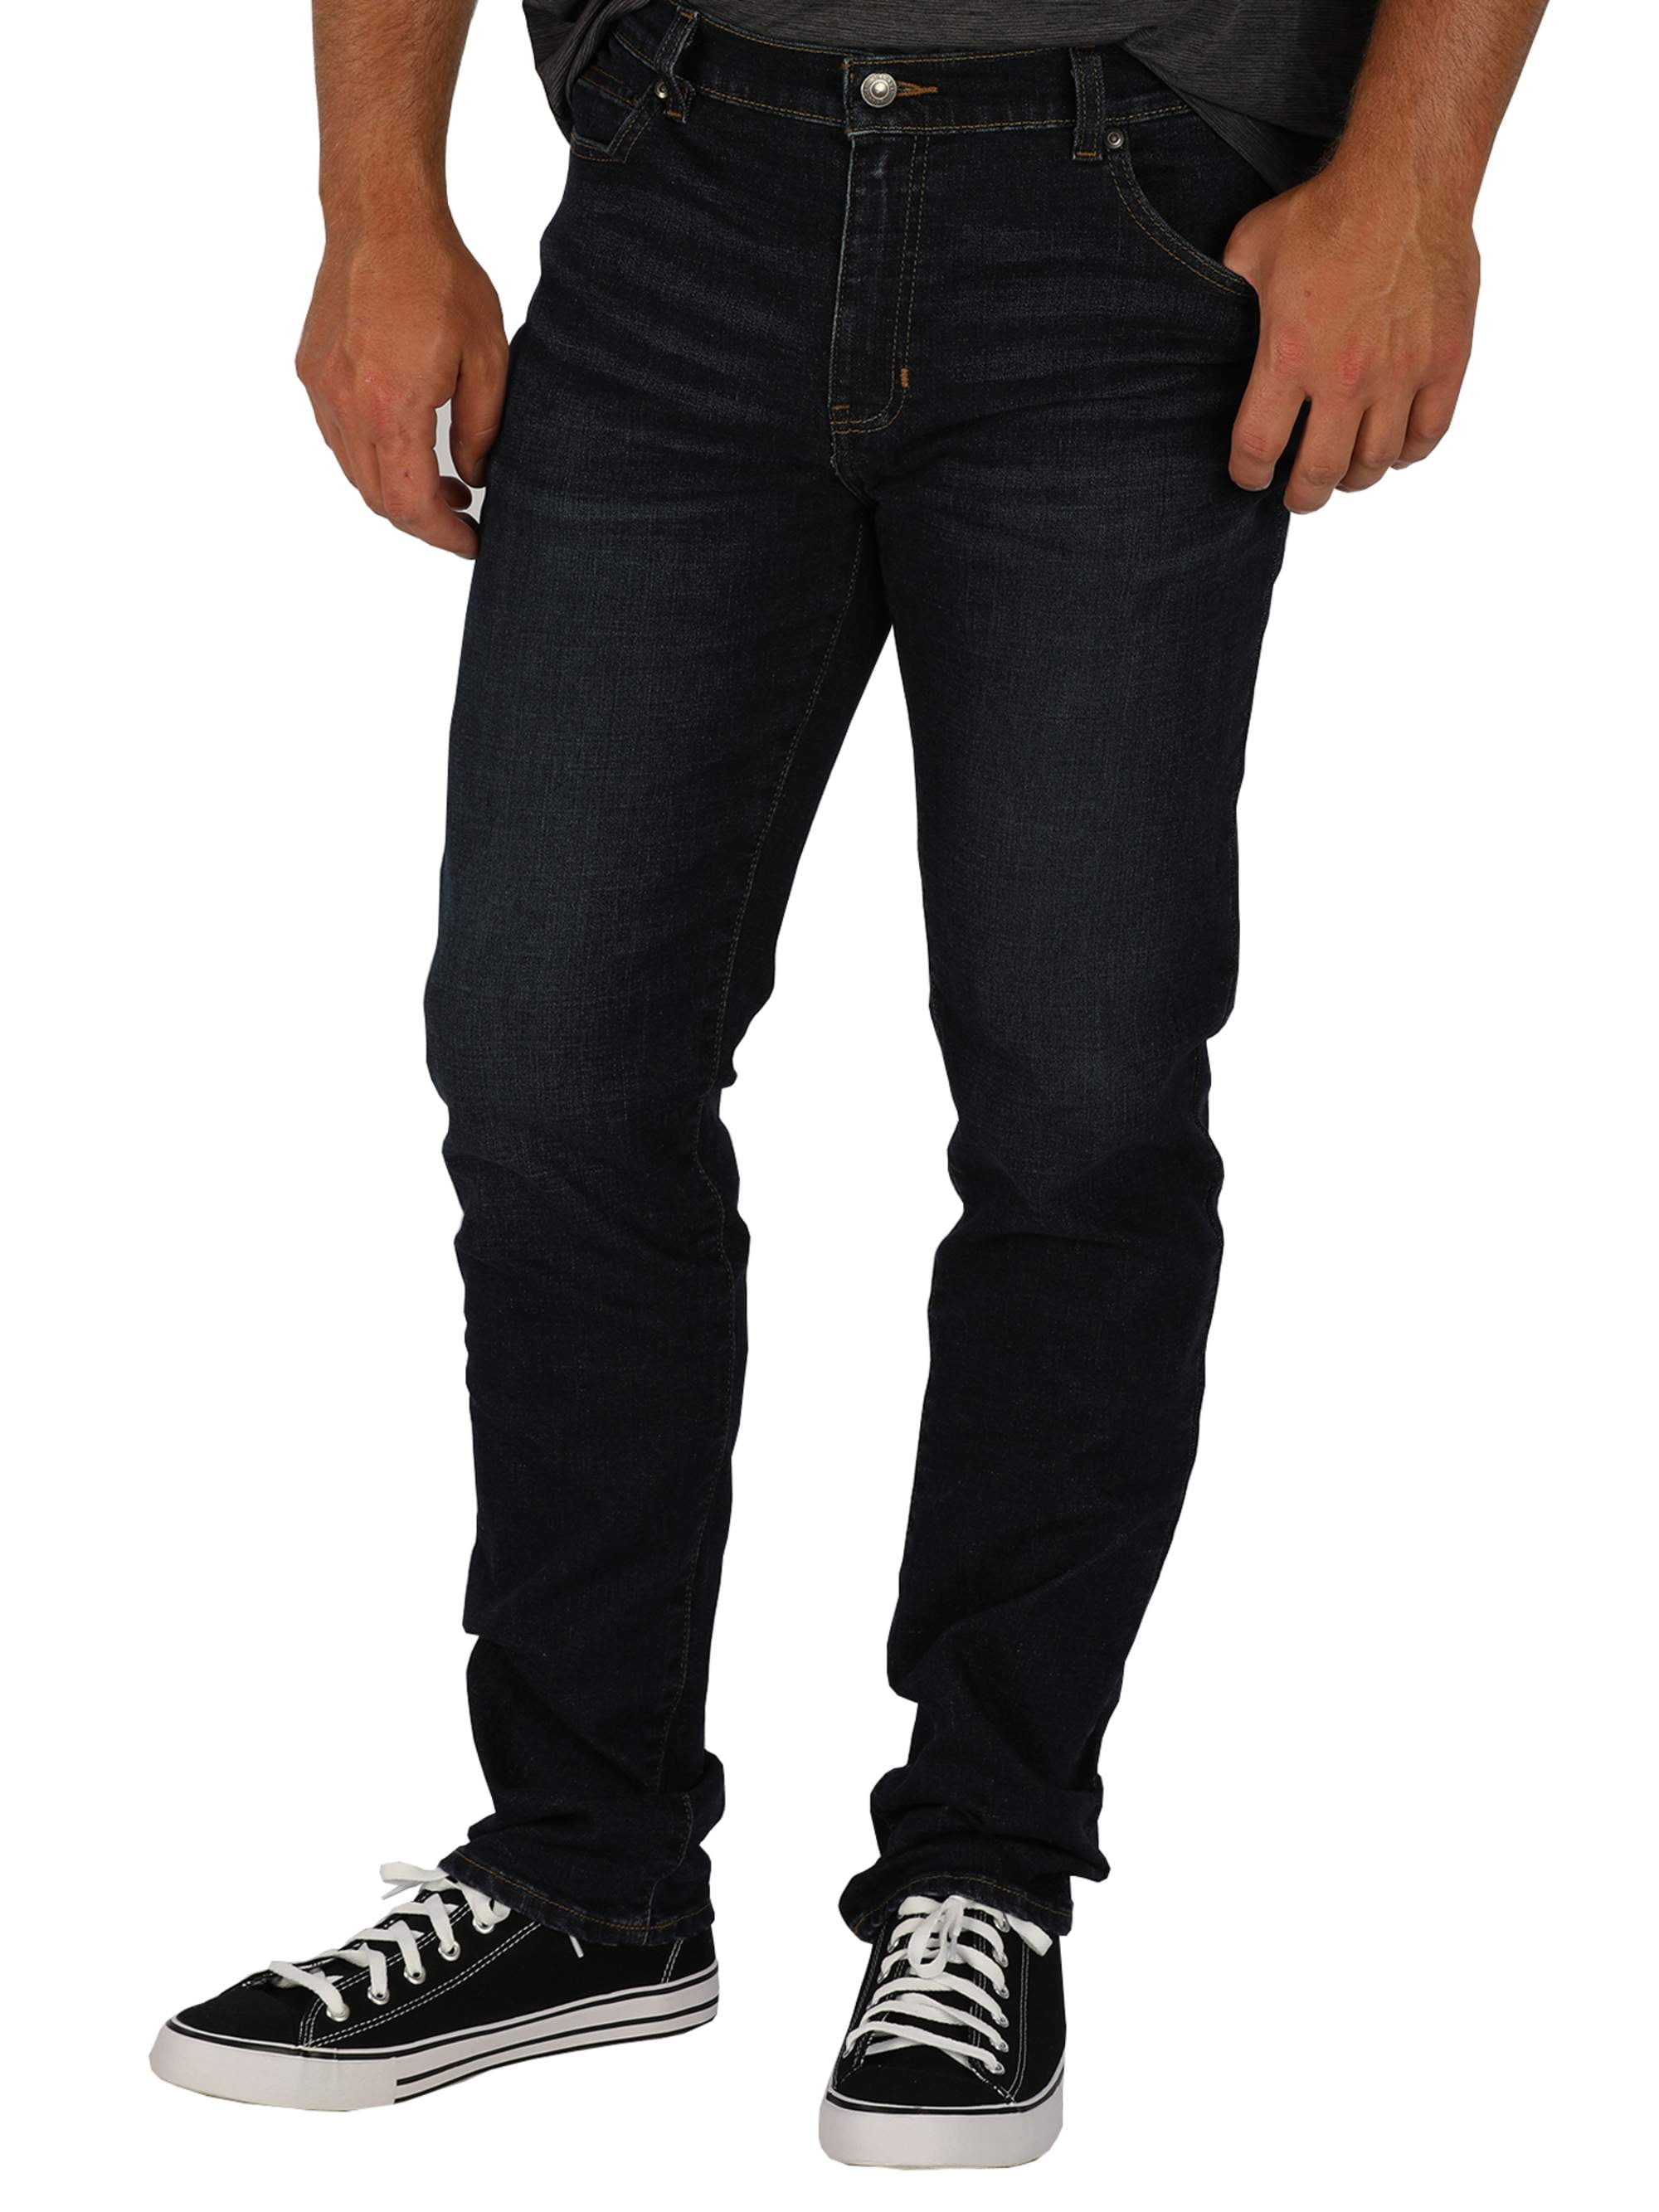 Men's Skinny Fit Jeans - Walmart.com